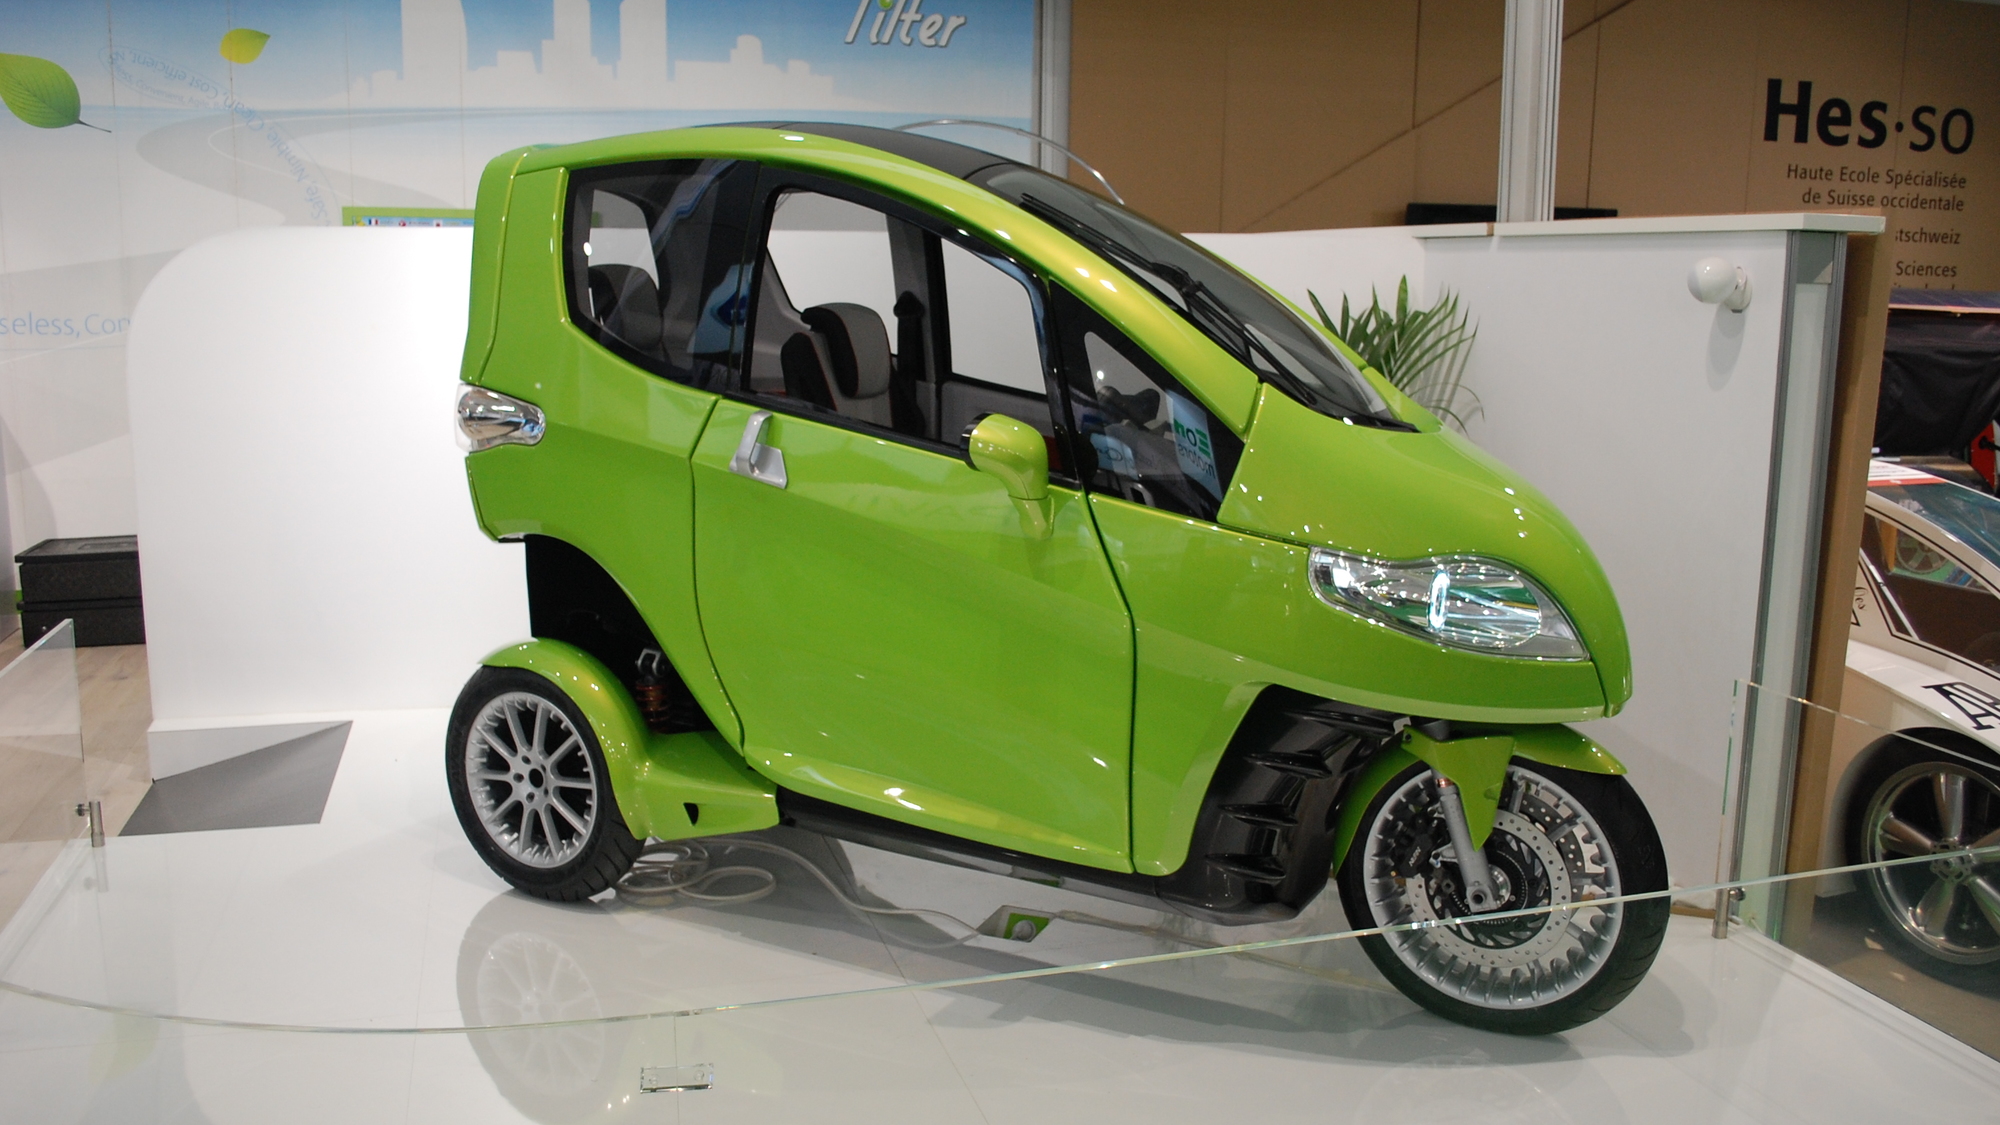 Tilter electric vehicle, 2011 Geneva Motor Show